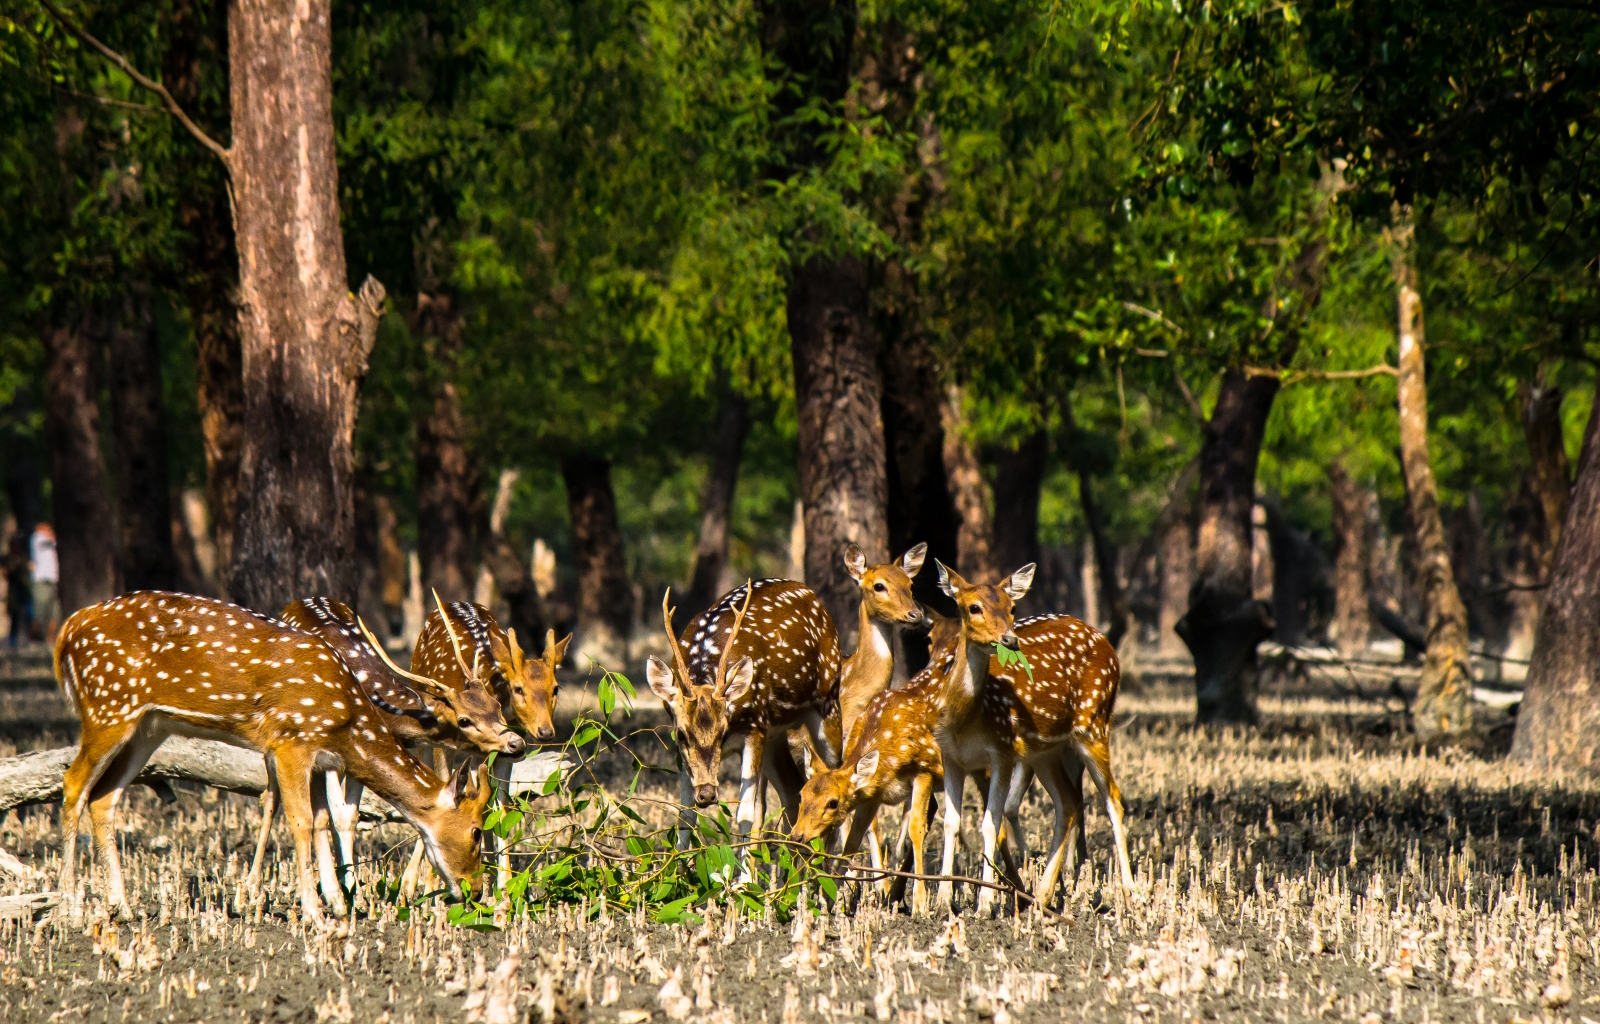 Sundarbans: Hiran Point